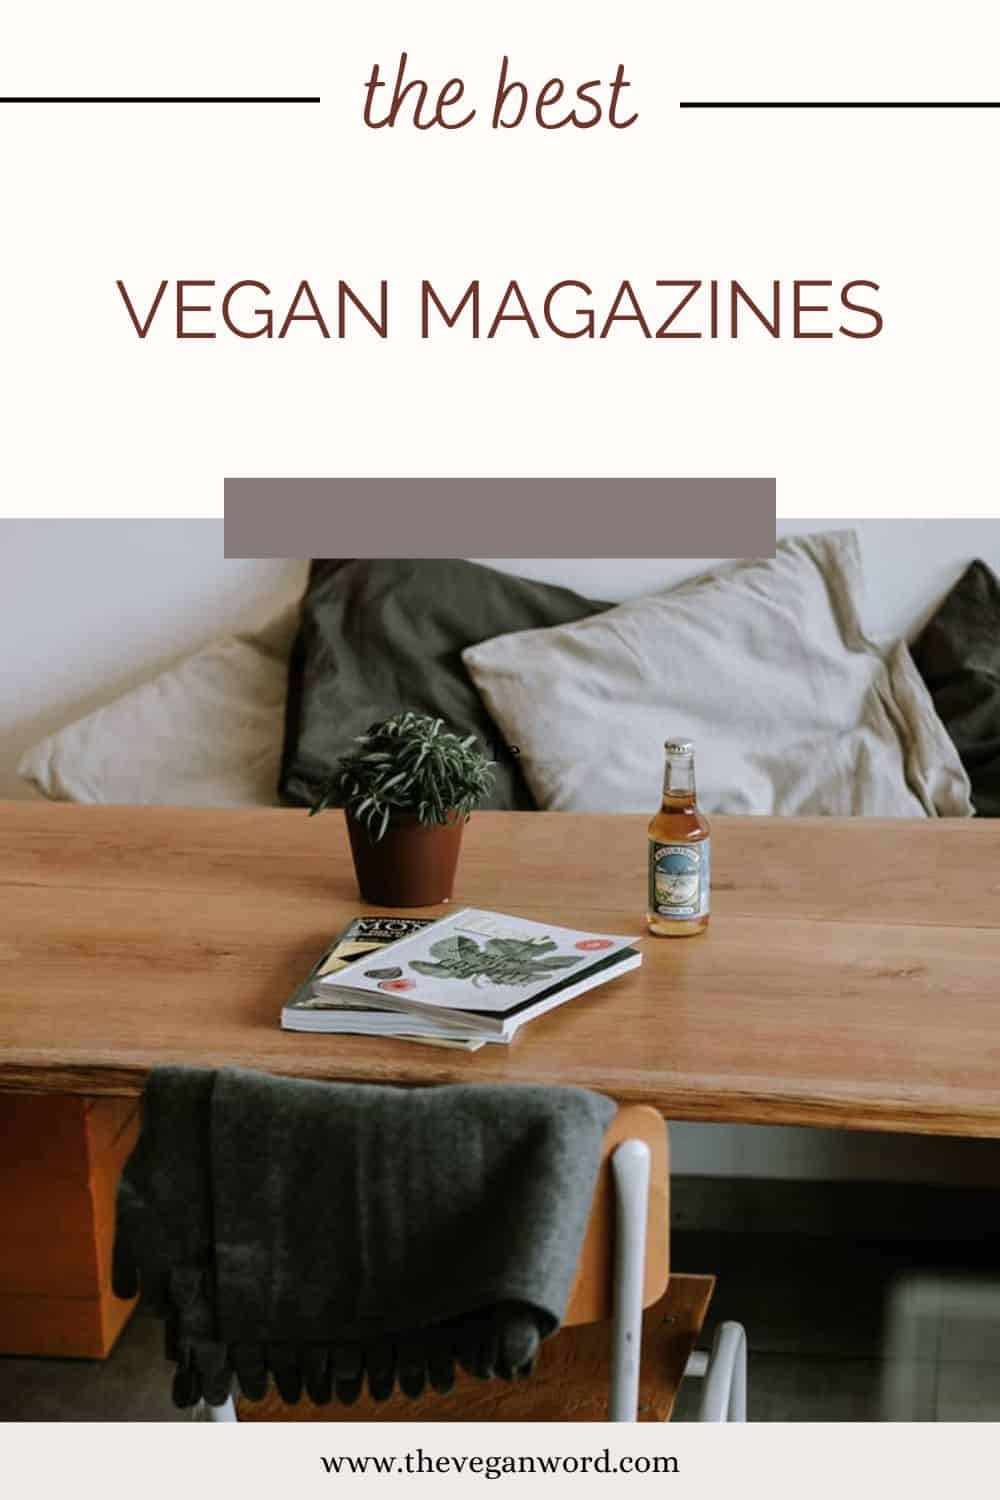 The best vegan magazines in the UK, US and Australia